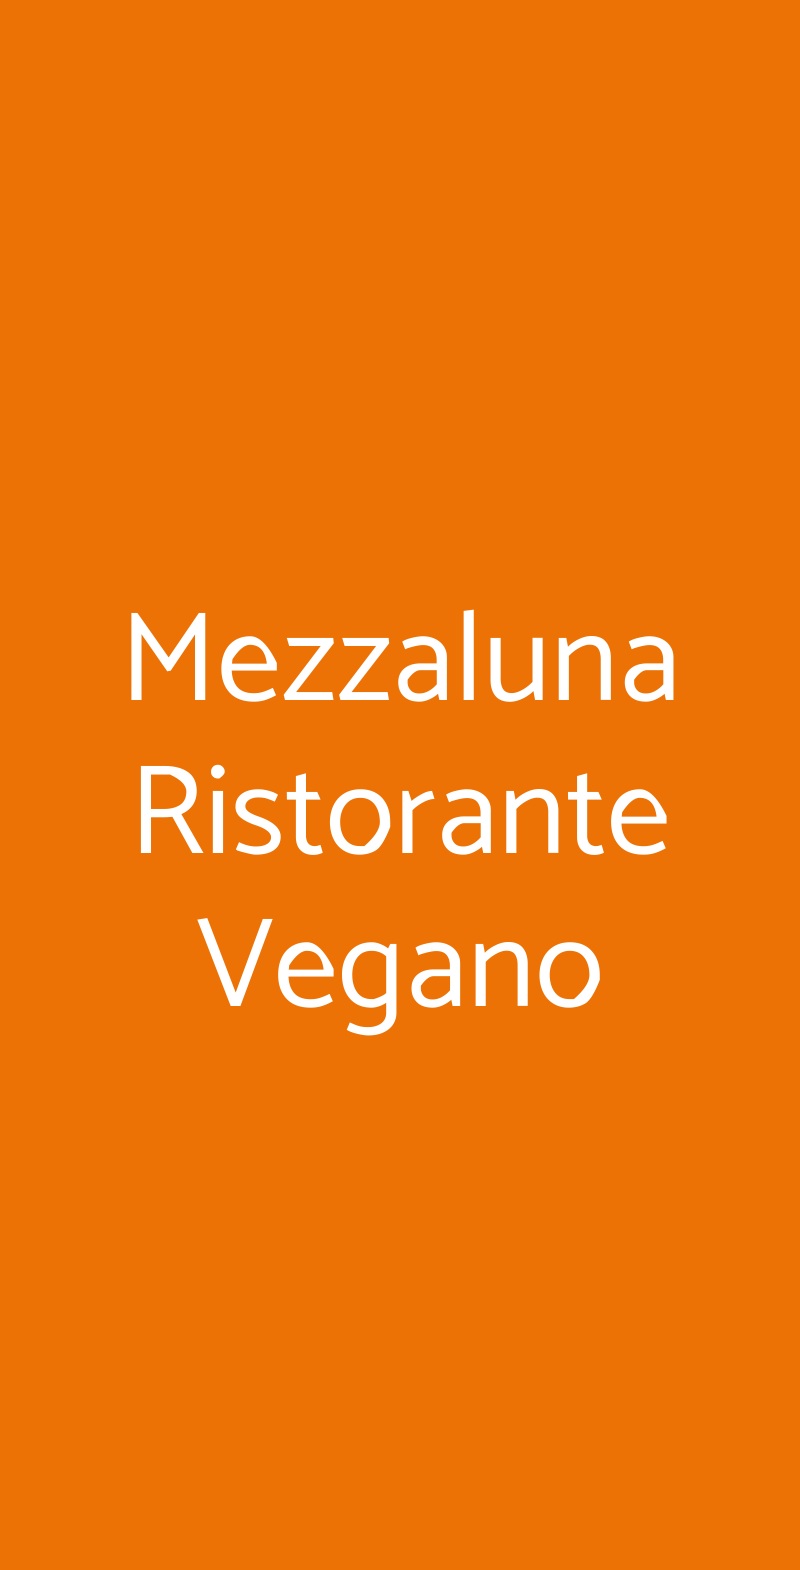 Mezzaluna Ristorante Vegano Torino menù 1 pagina